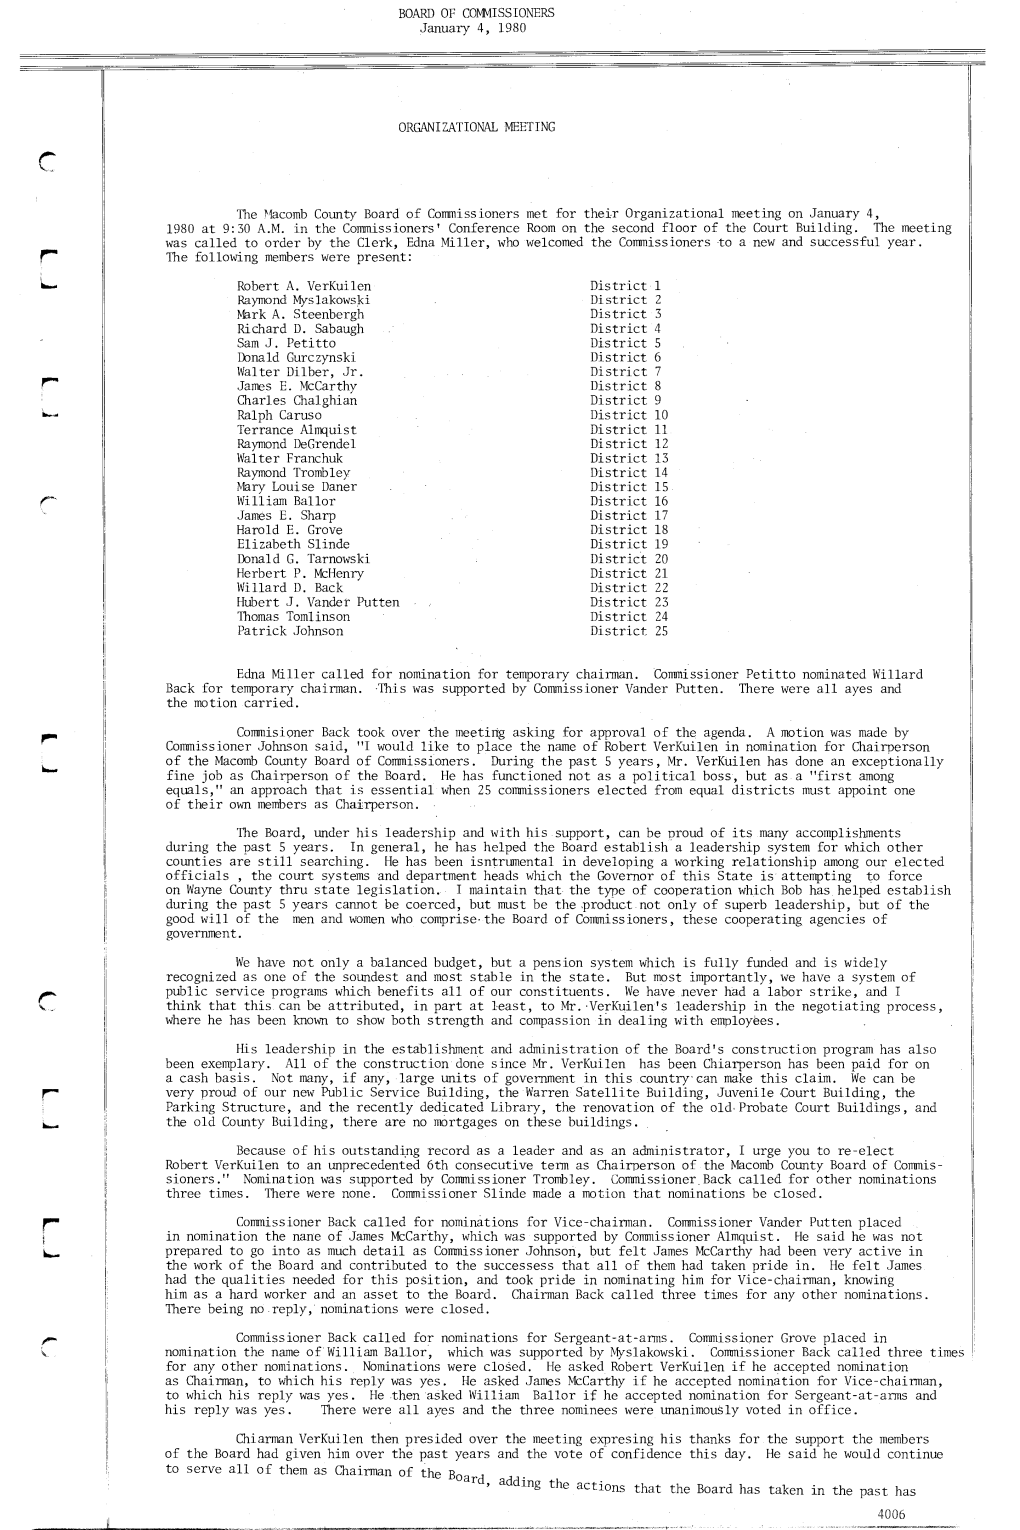 COMMISSIONERS PROCEEDINGS 1979-1981.Tif